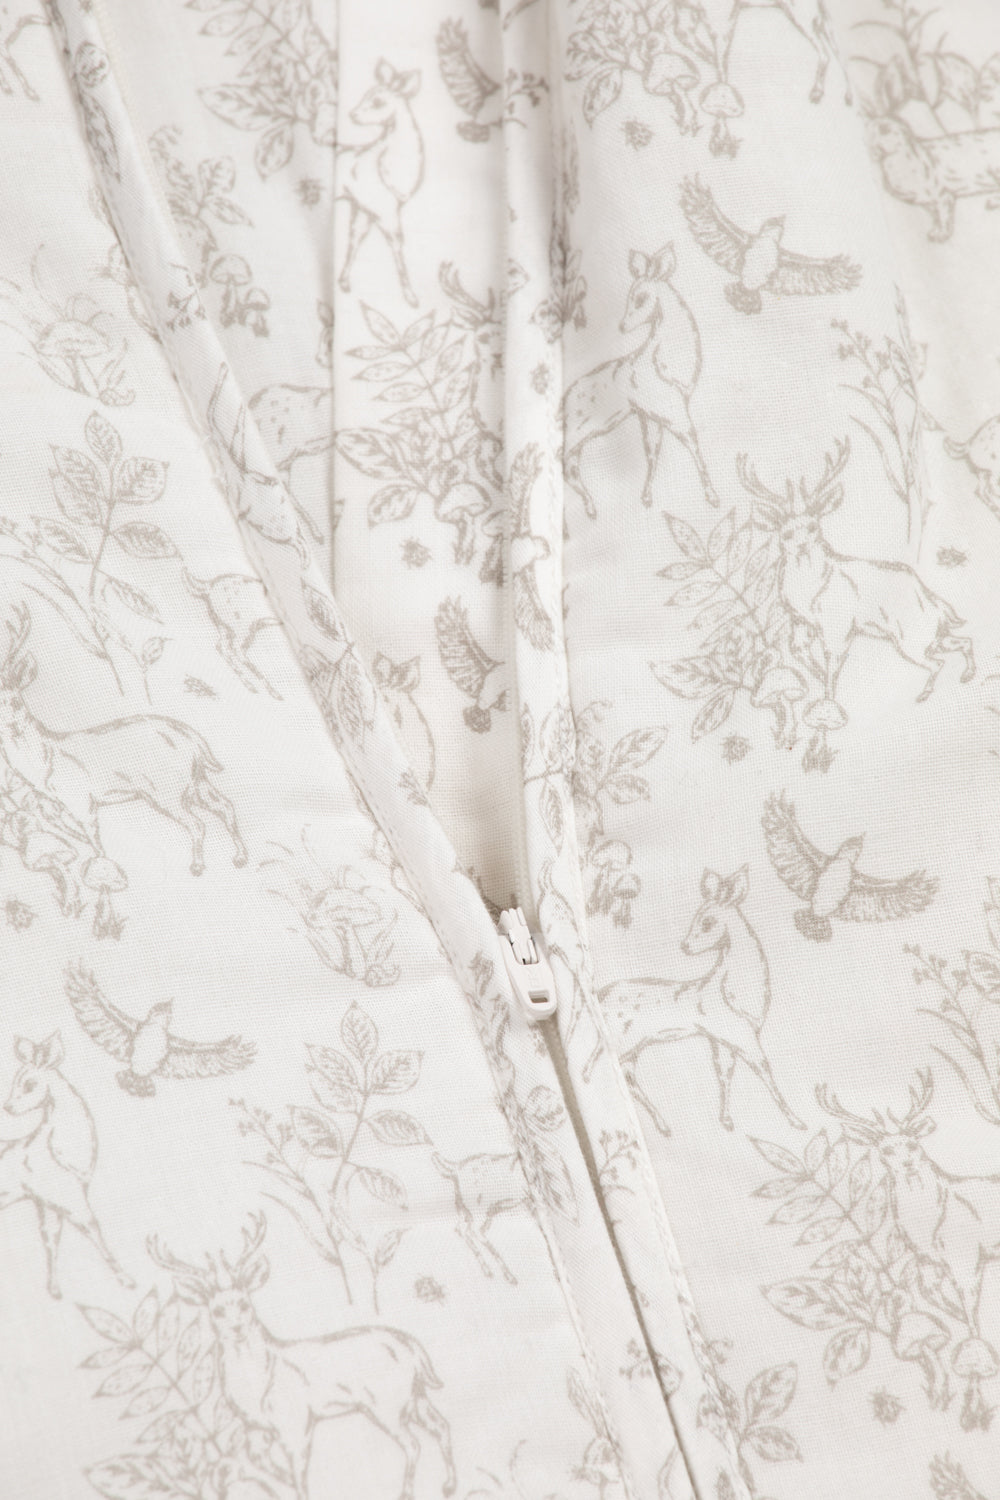 Cotton Muslin Sleeping Bag 2.5 Tog, white woodland print